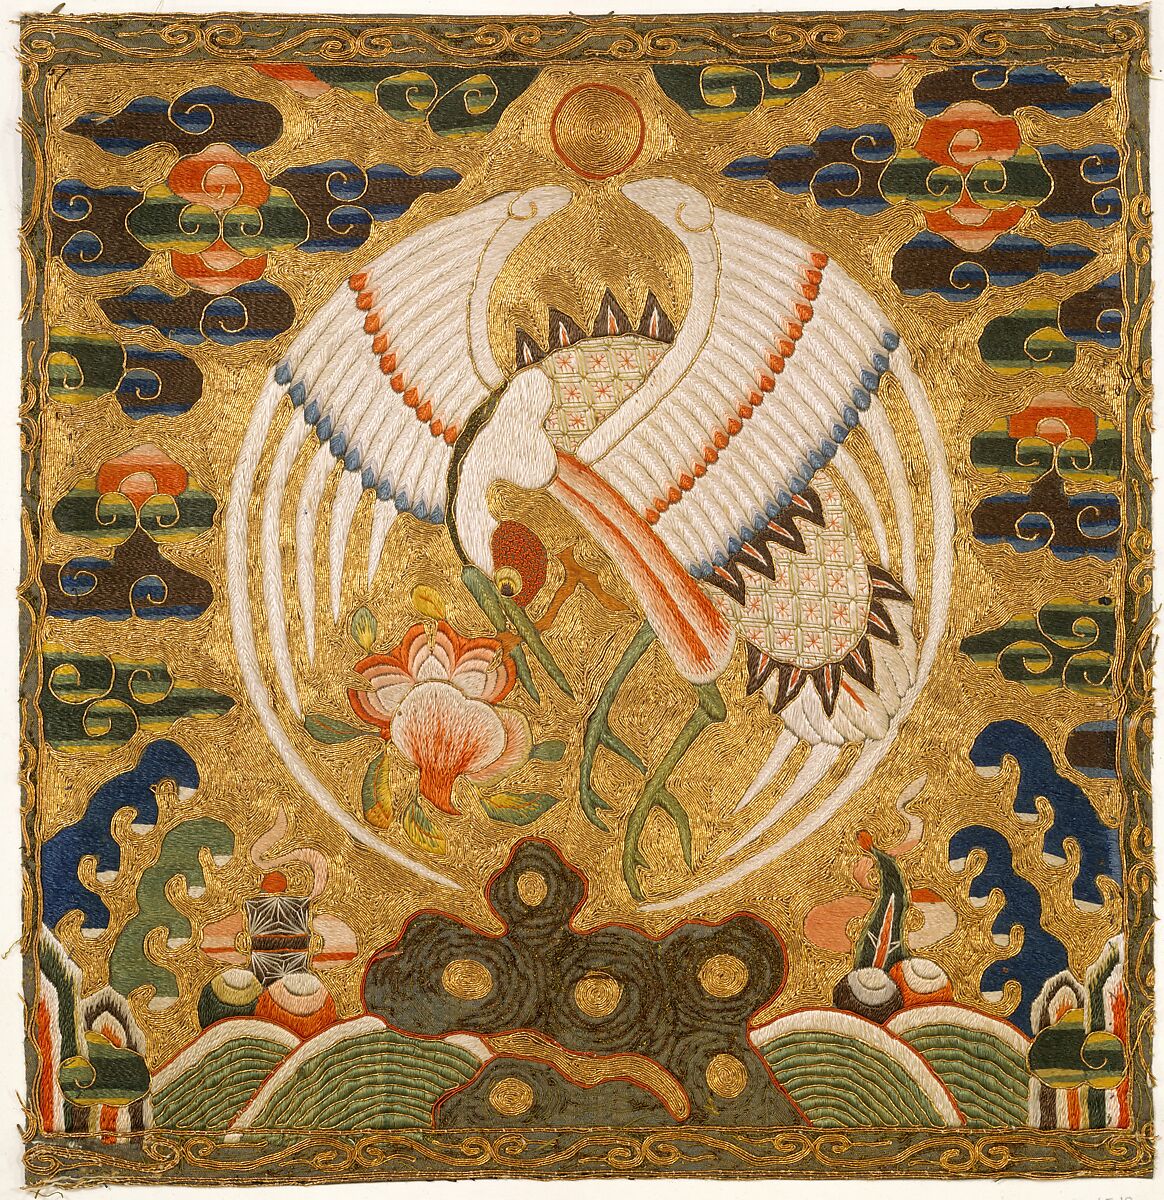 Rank Badge with Crane, Silk and metallic thread embroidery on silk satin, China